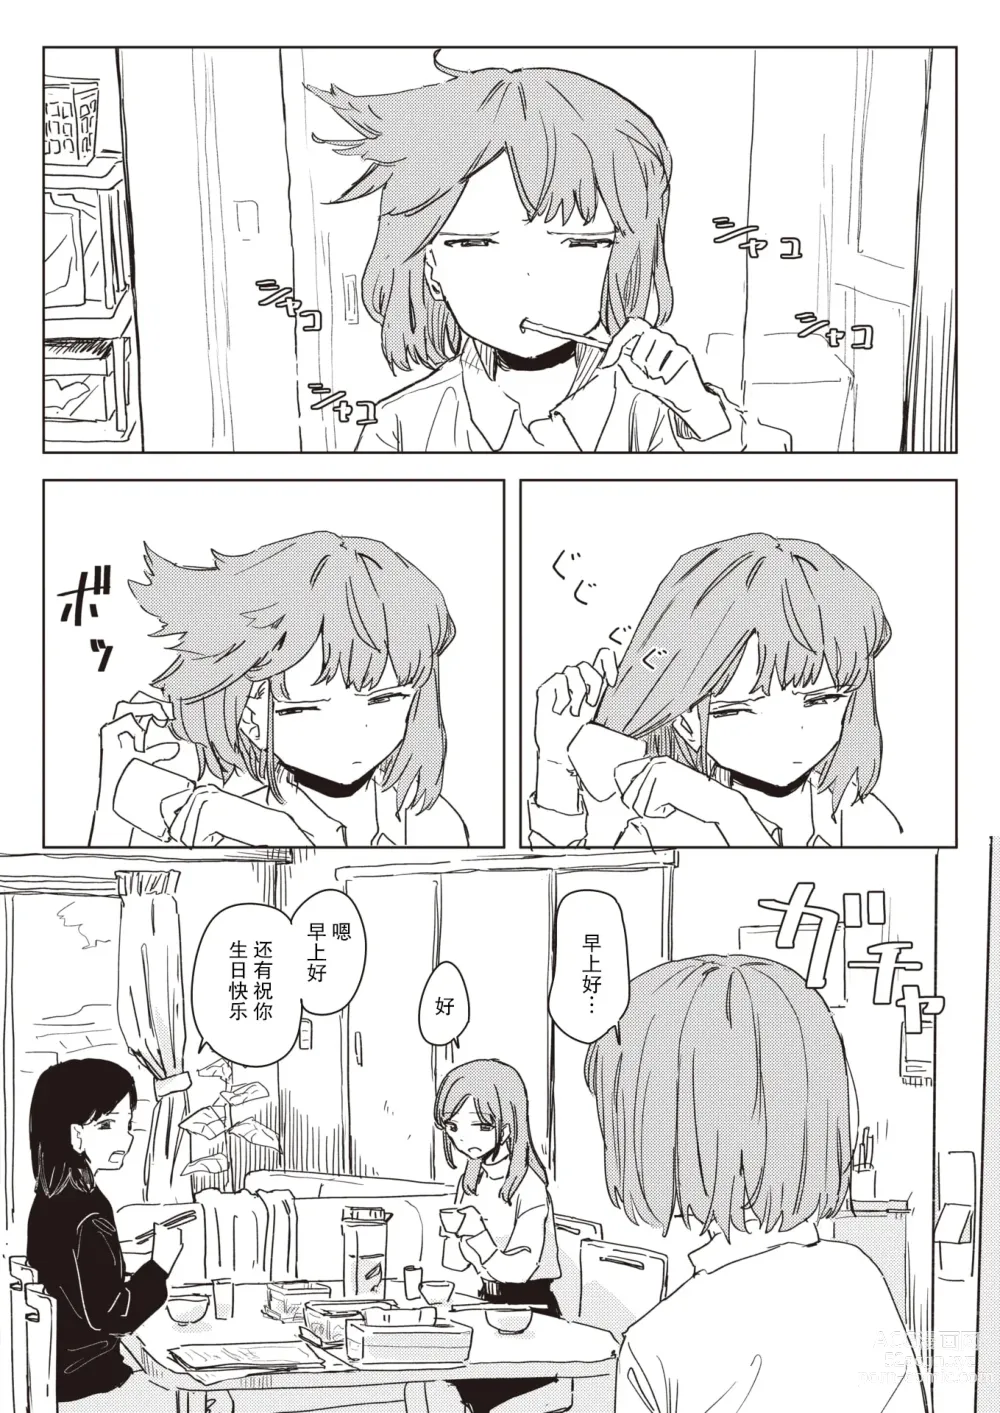 Page 3 of manga Unhappy Birthday